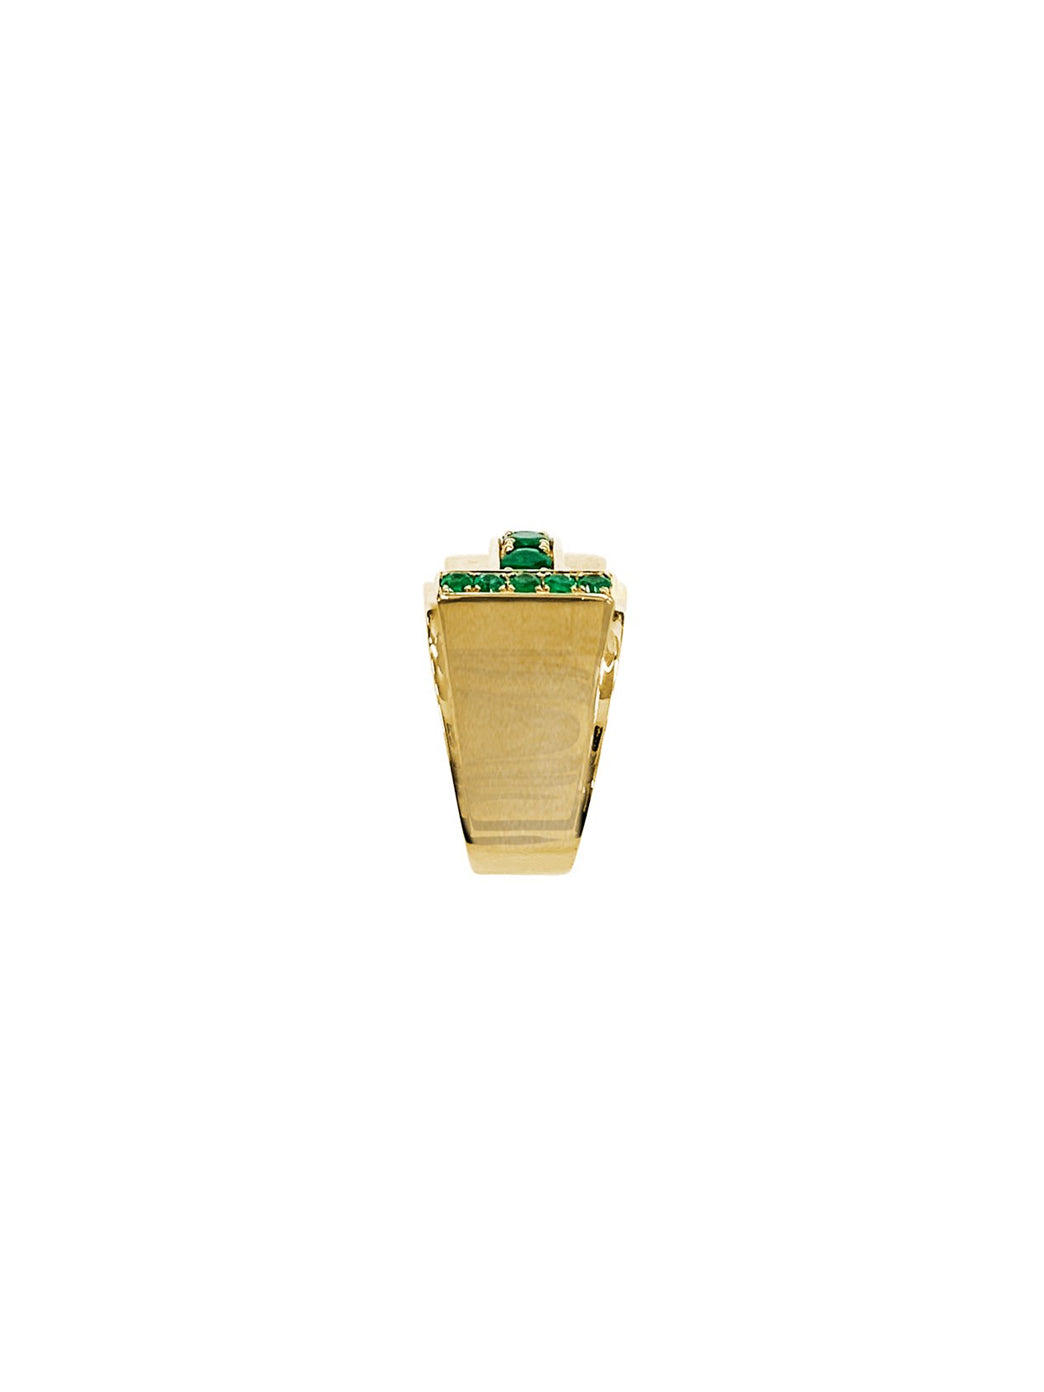 Fiorina Jewellery Martini Ring Emerald Shank View